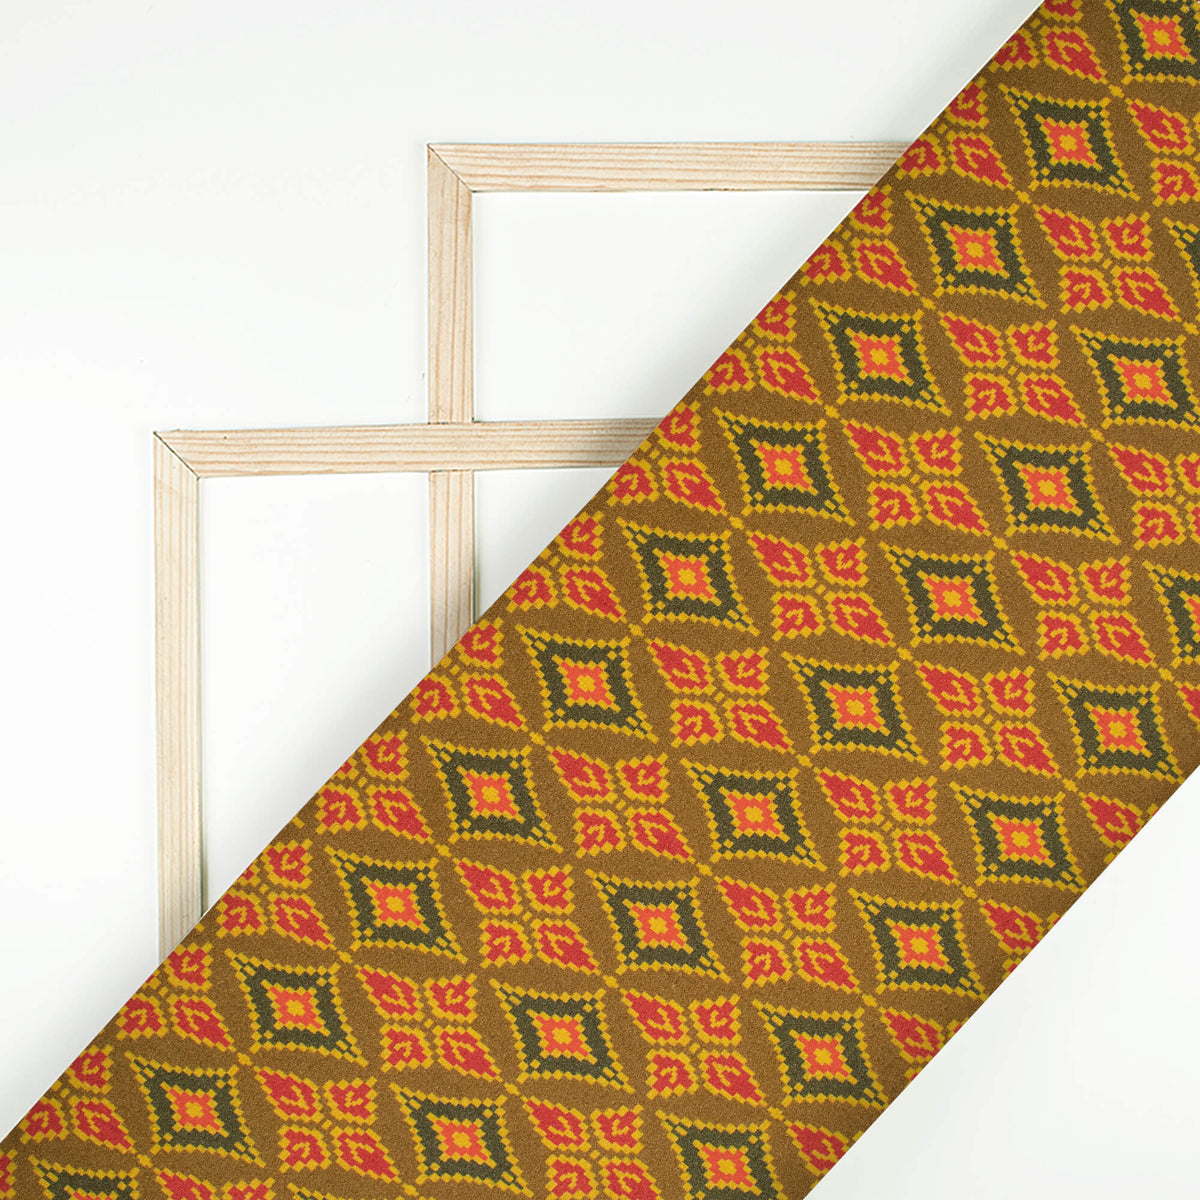 Dijon Yellow And Red Patola Pattern Digital Print Viscose Rayon Fabric (Width 58 Inches)